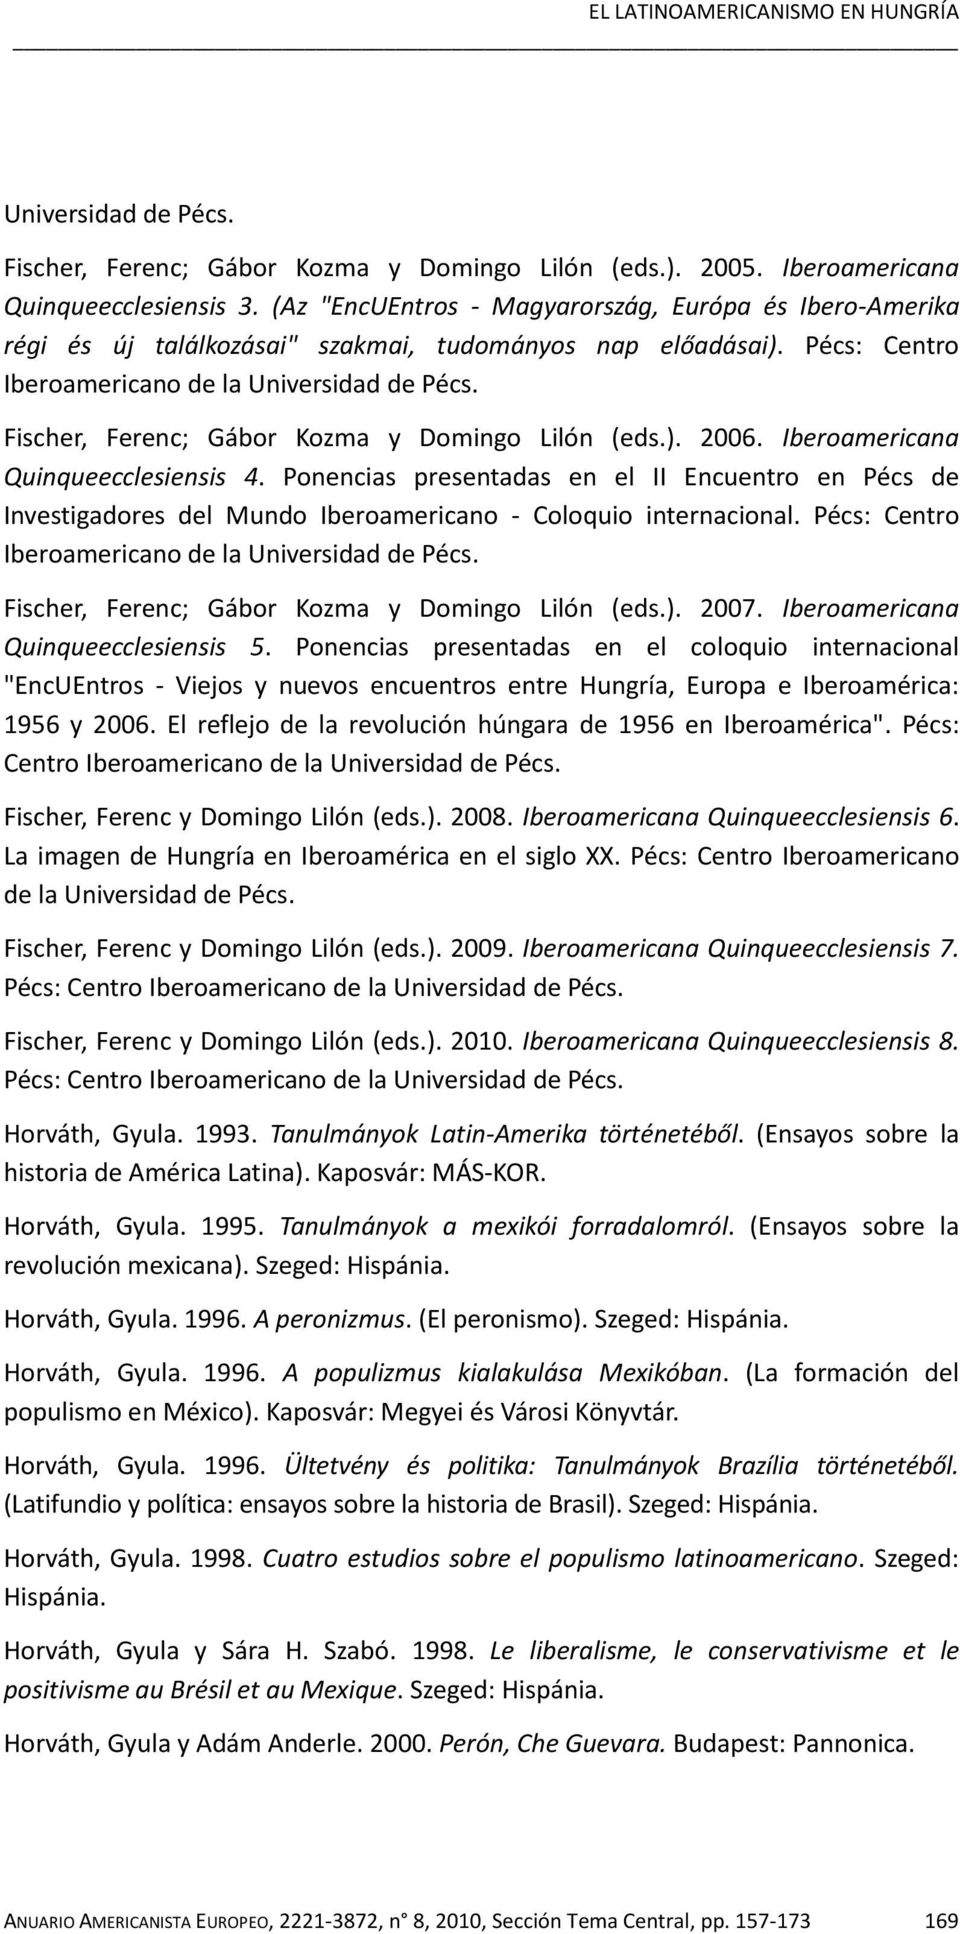 Fischer, Ferenc; Gábor Kozma y Domingo Lilón (eds.). 2006. Iberoamericana Quinqueecclesiensis 4.